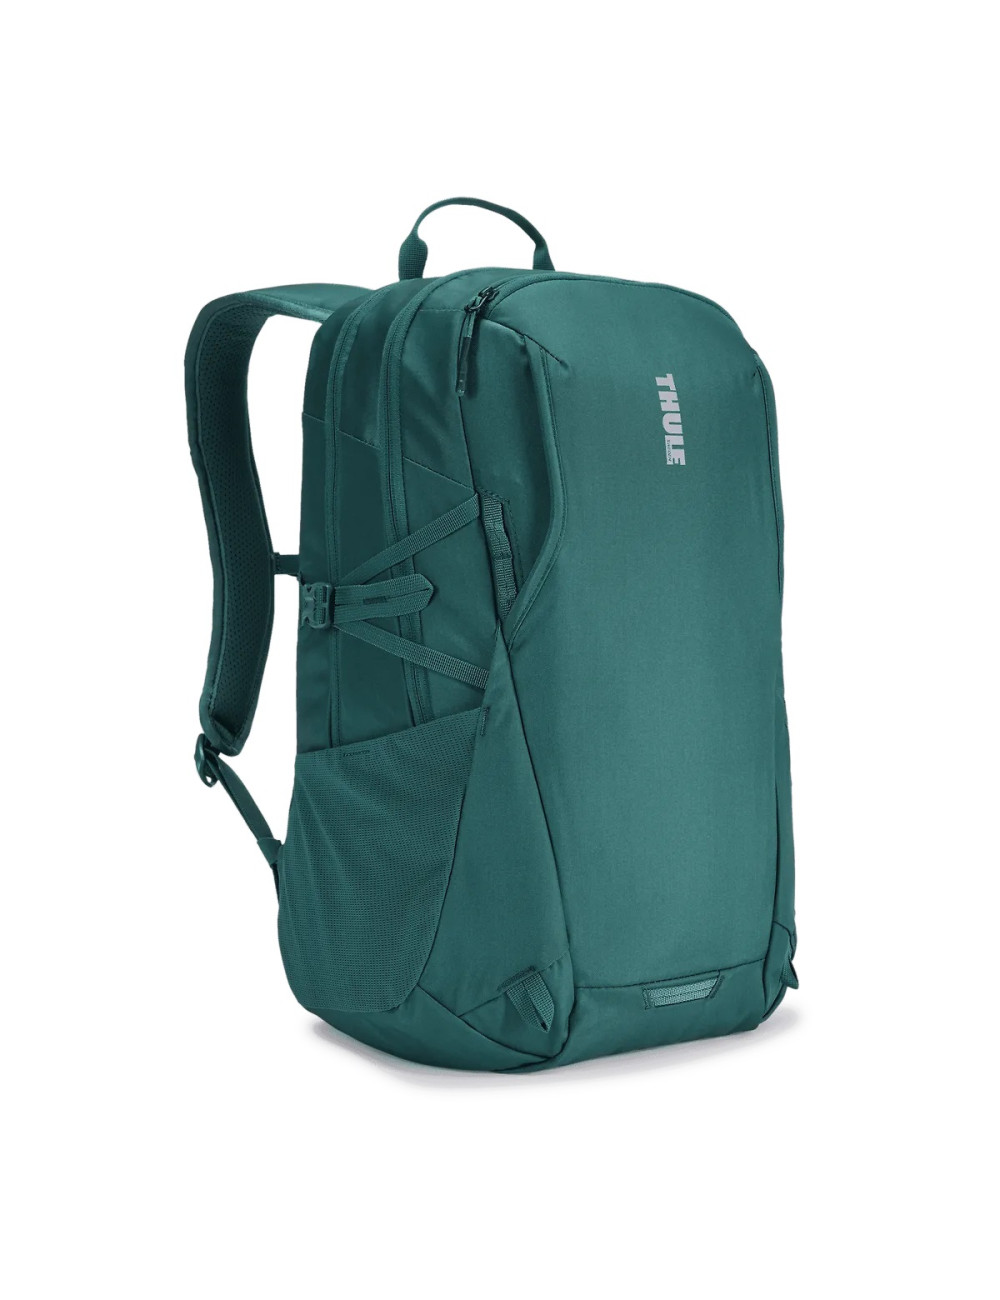 Thule Backpack 23L TEBP-4216 EnRoute Backpack, Mallard Green